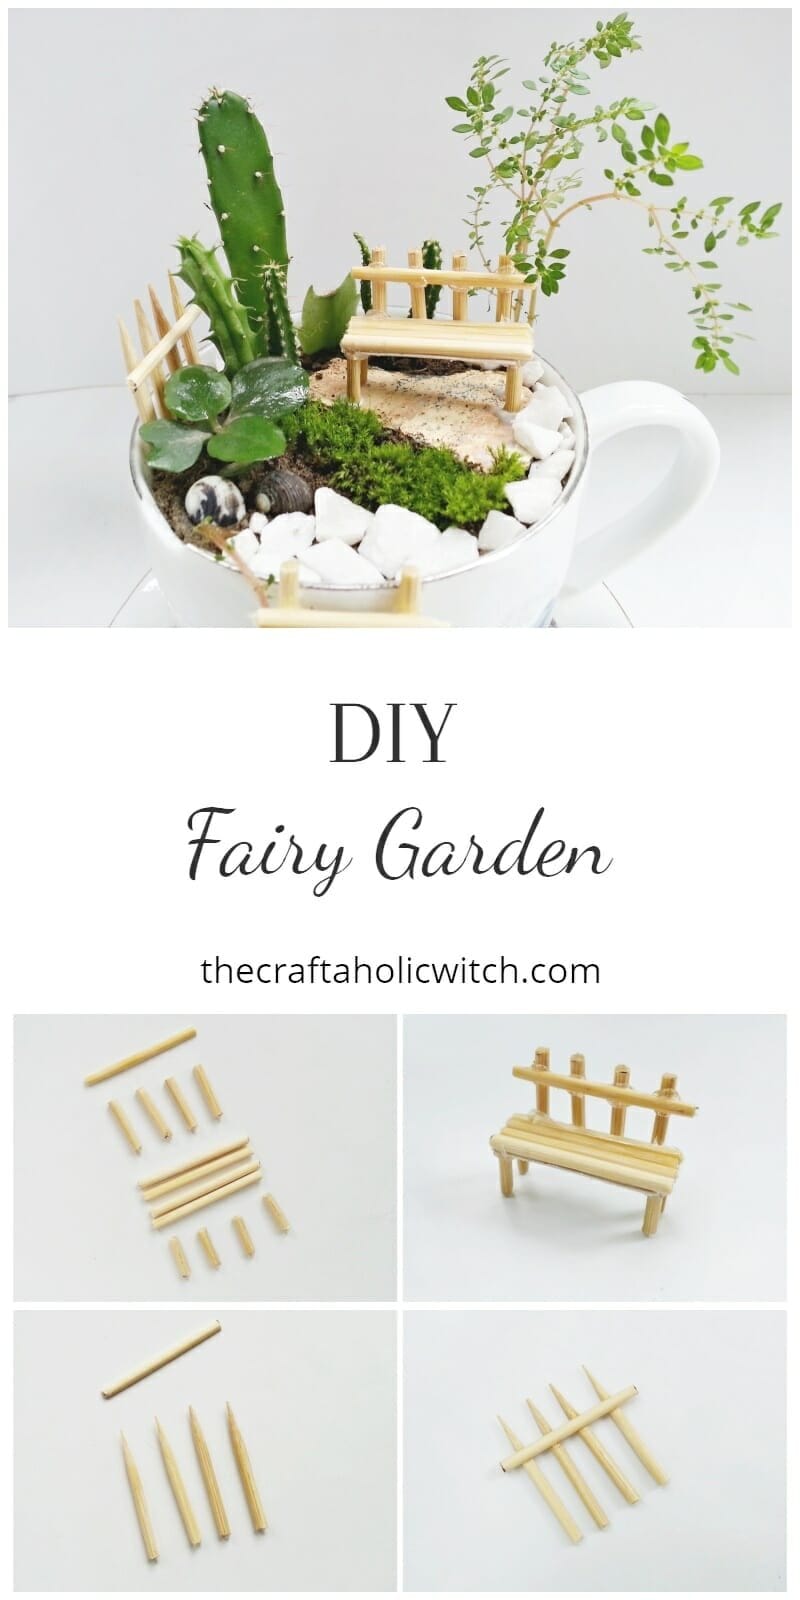 DIY Fairy Garden in a Cup